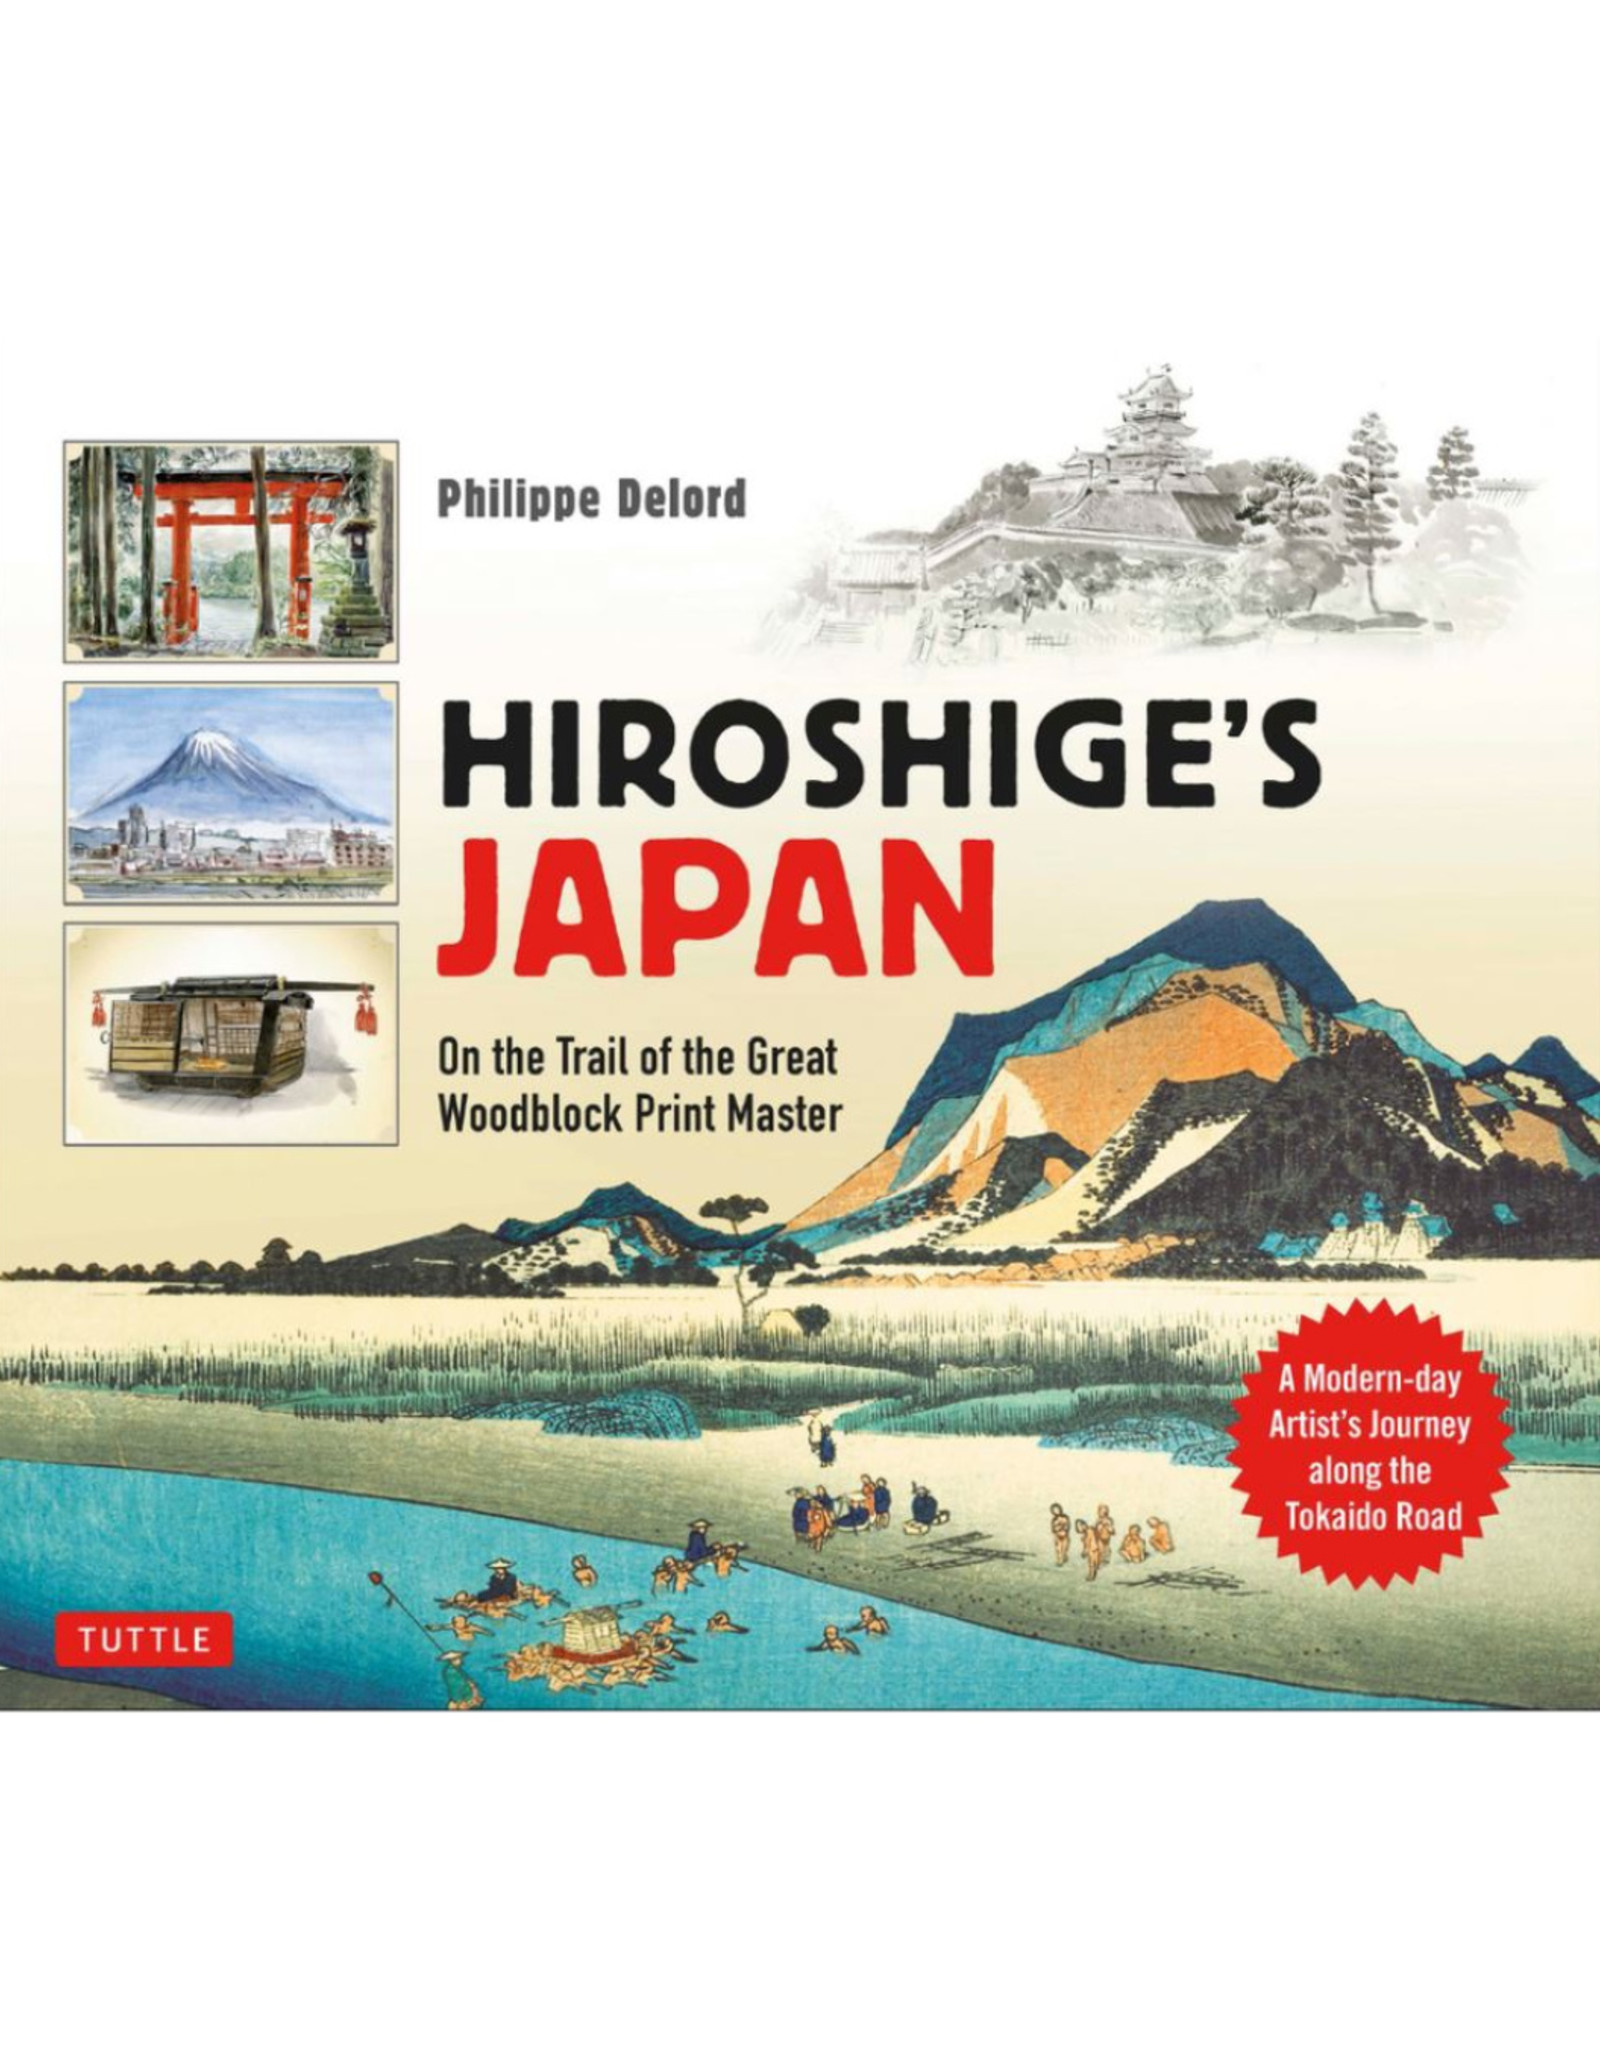 Hiroshige's Japan Print Series